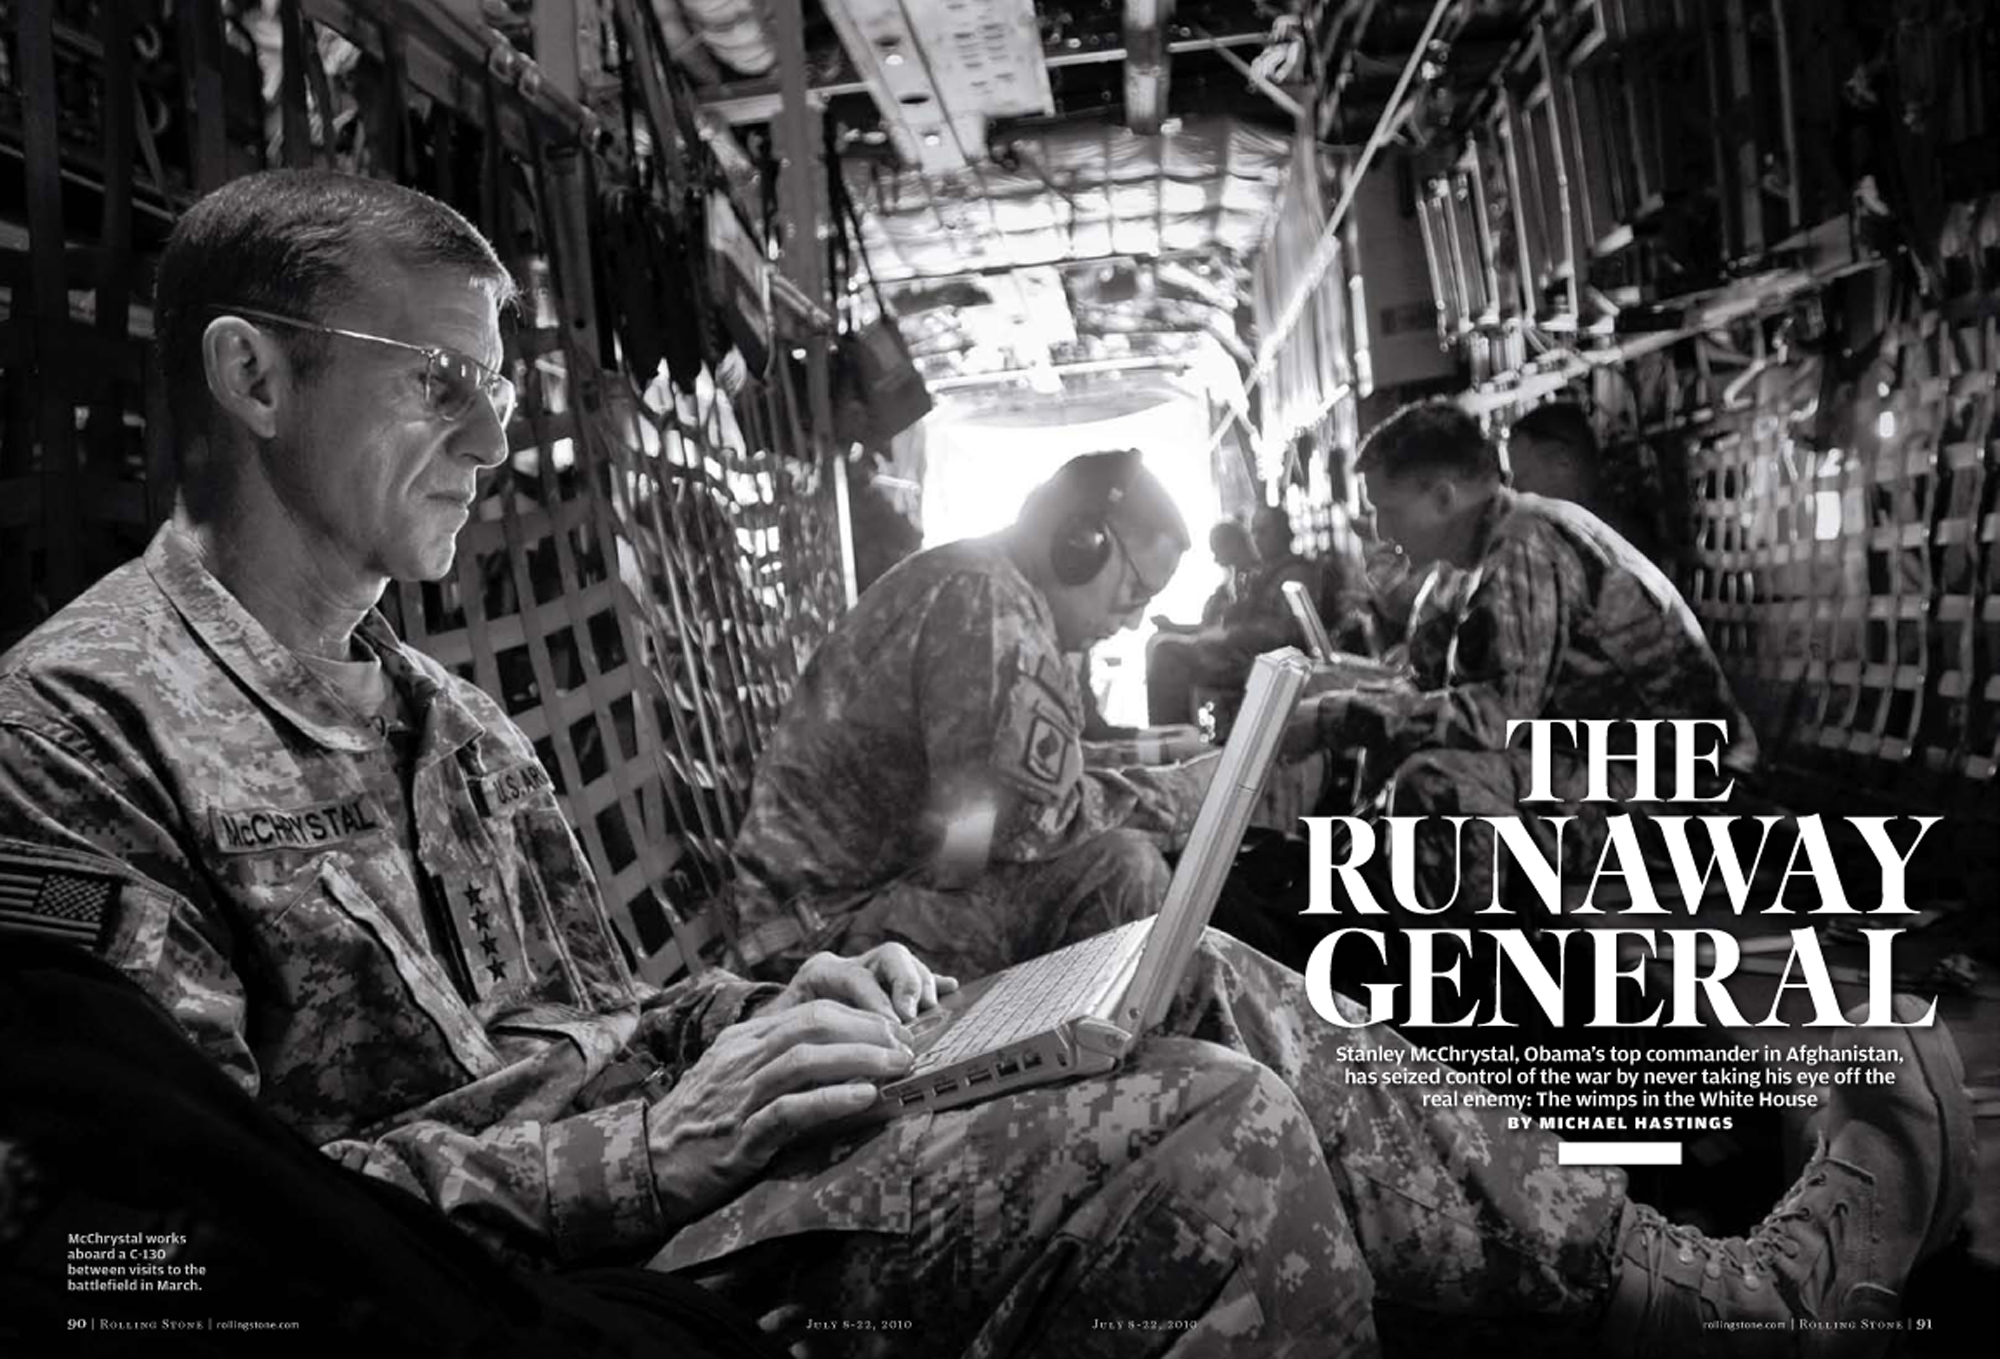 Stanley McChrystal, Barack Obama, Afghanistan, Rolling Stone